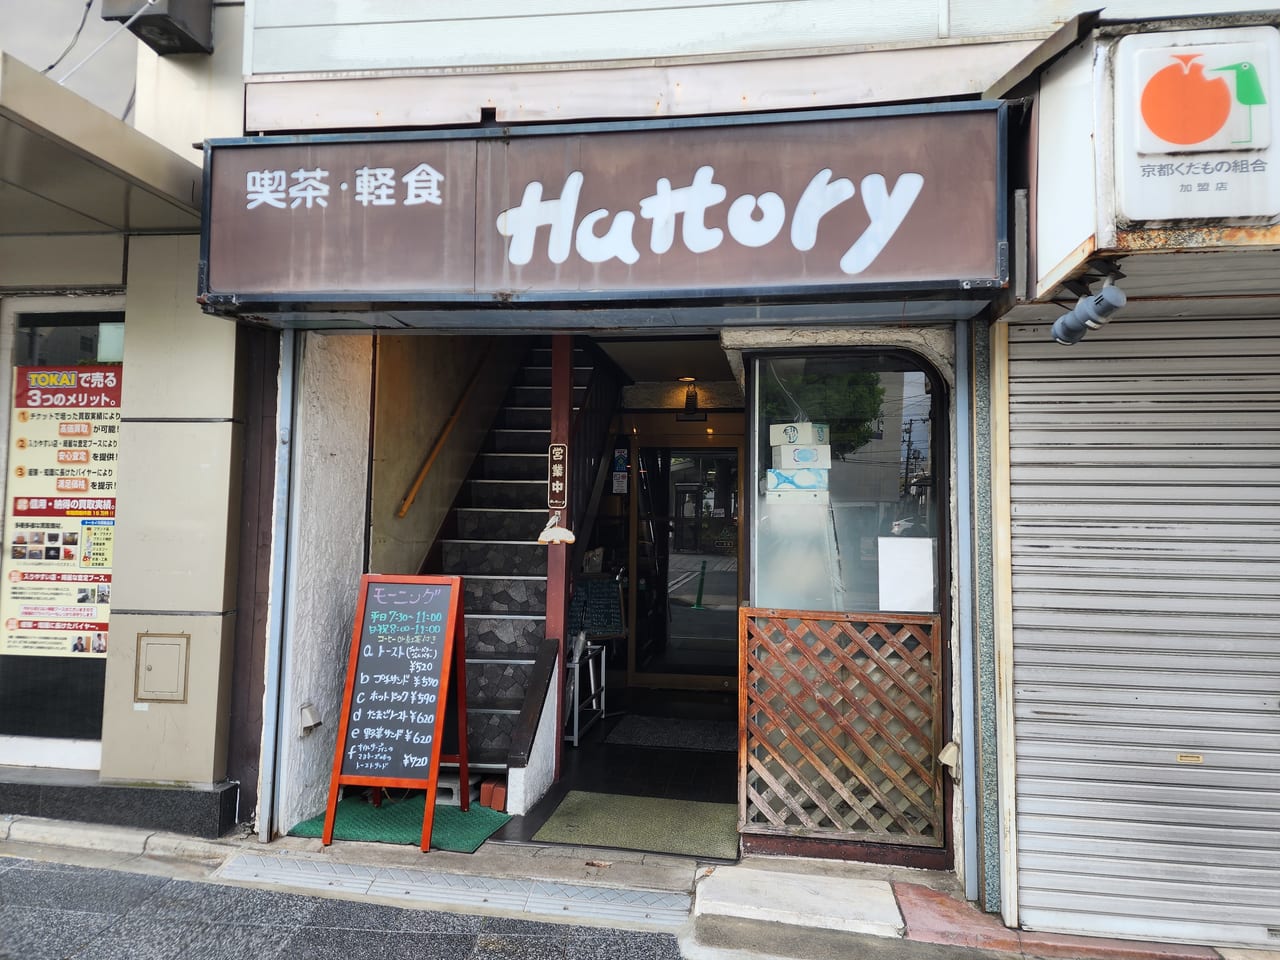 Hattory